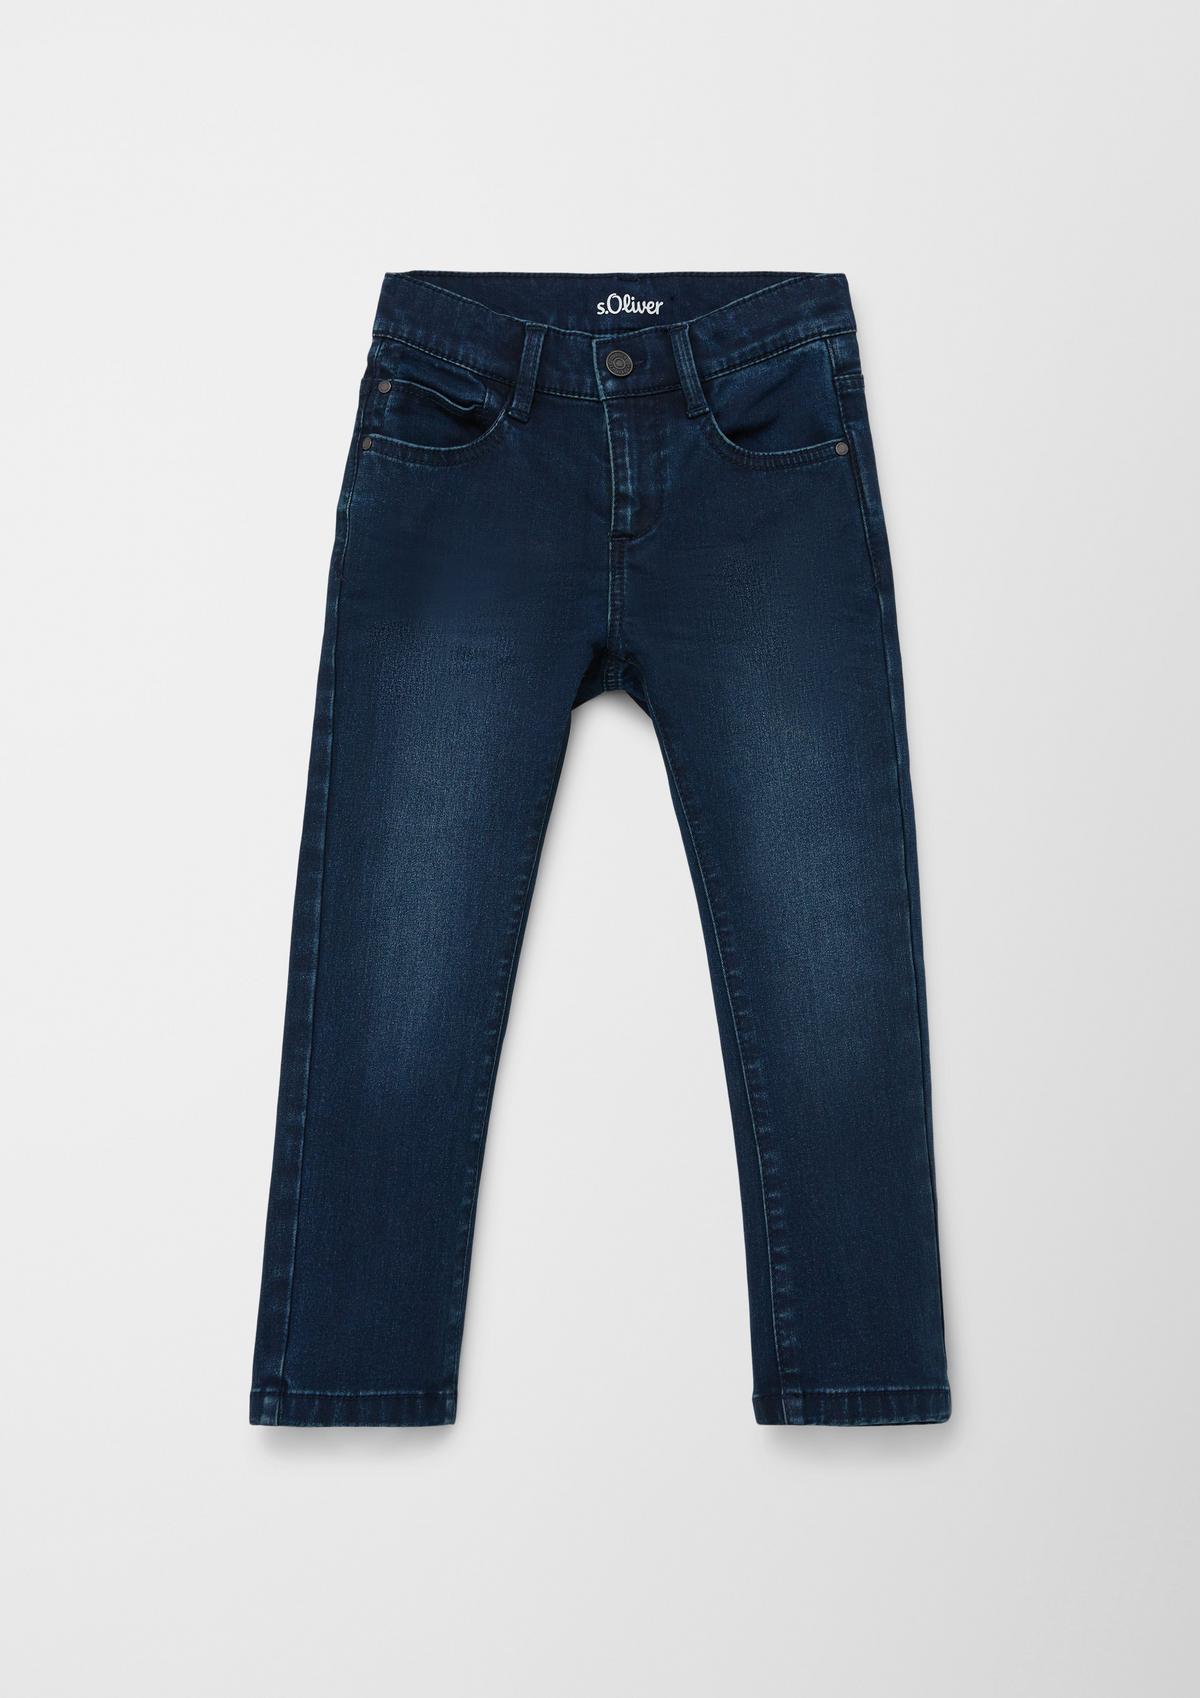 s.Oliver Pelle jeans / regular fit / mid rise / straight leg / vintage look